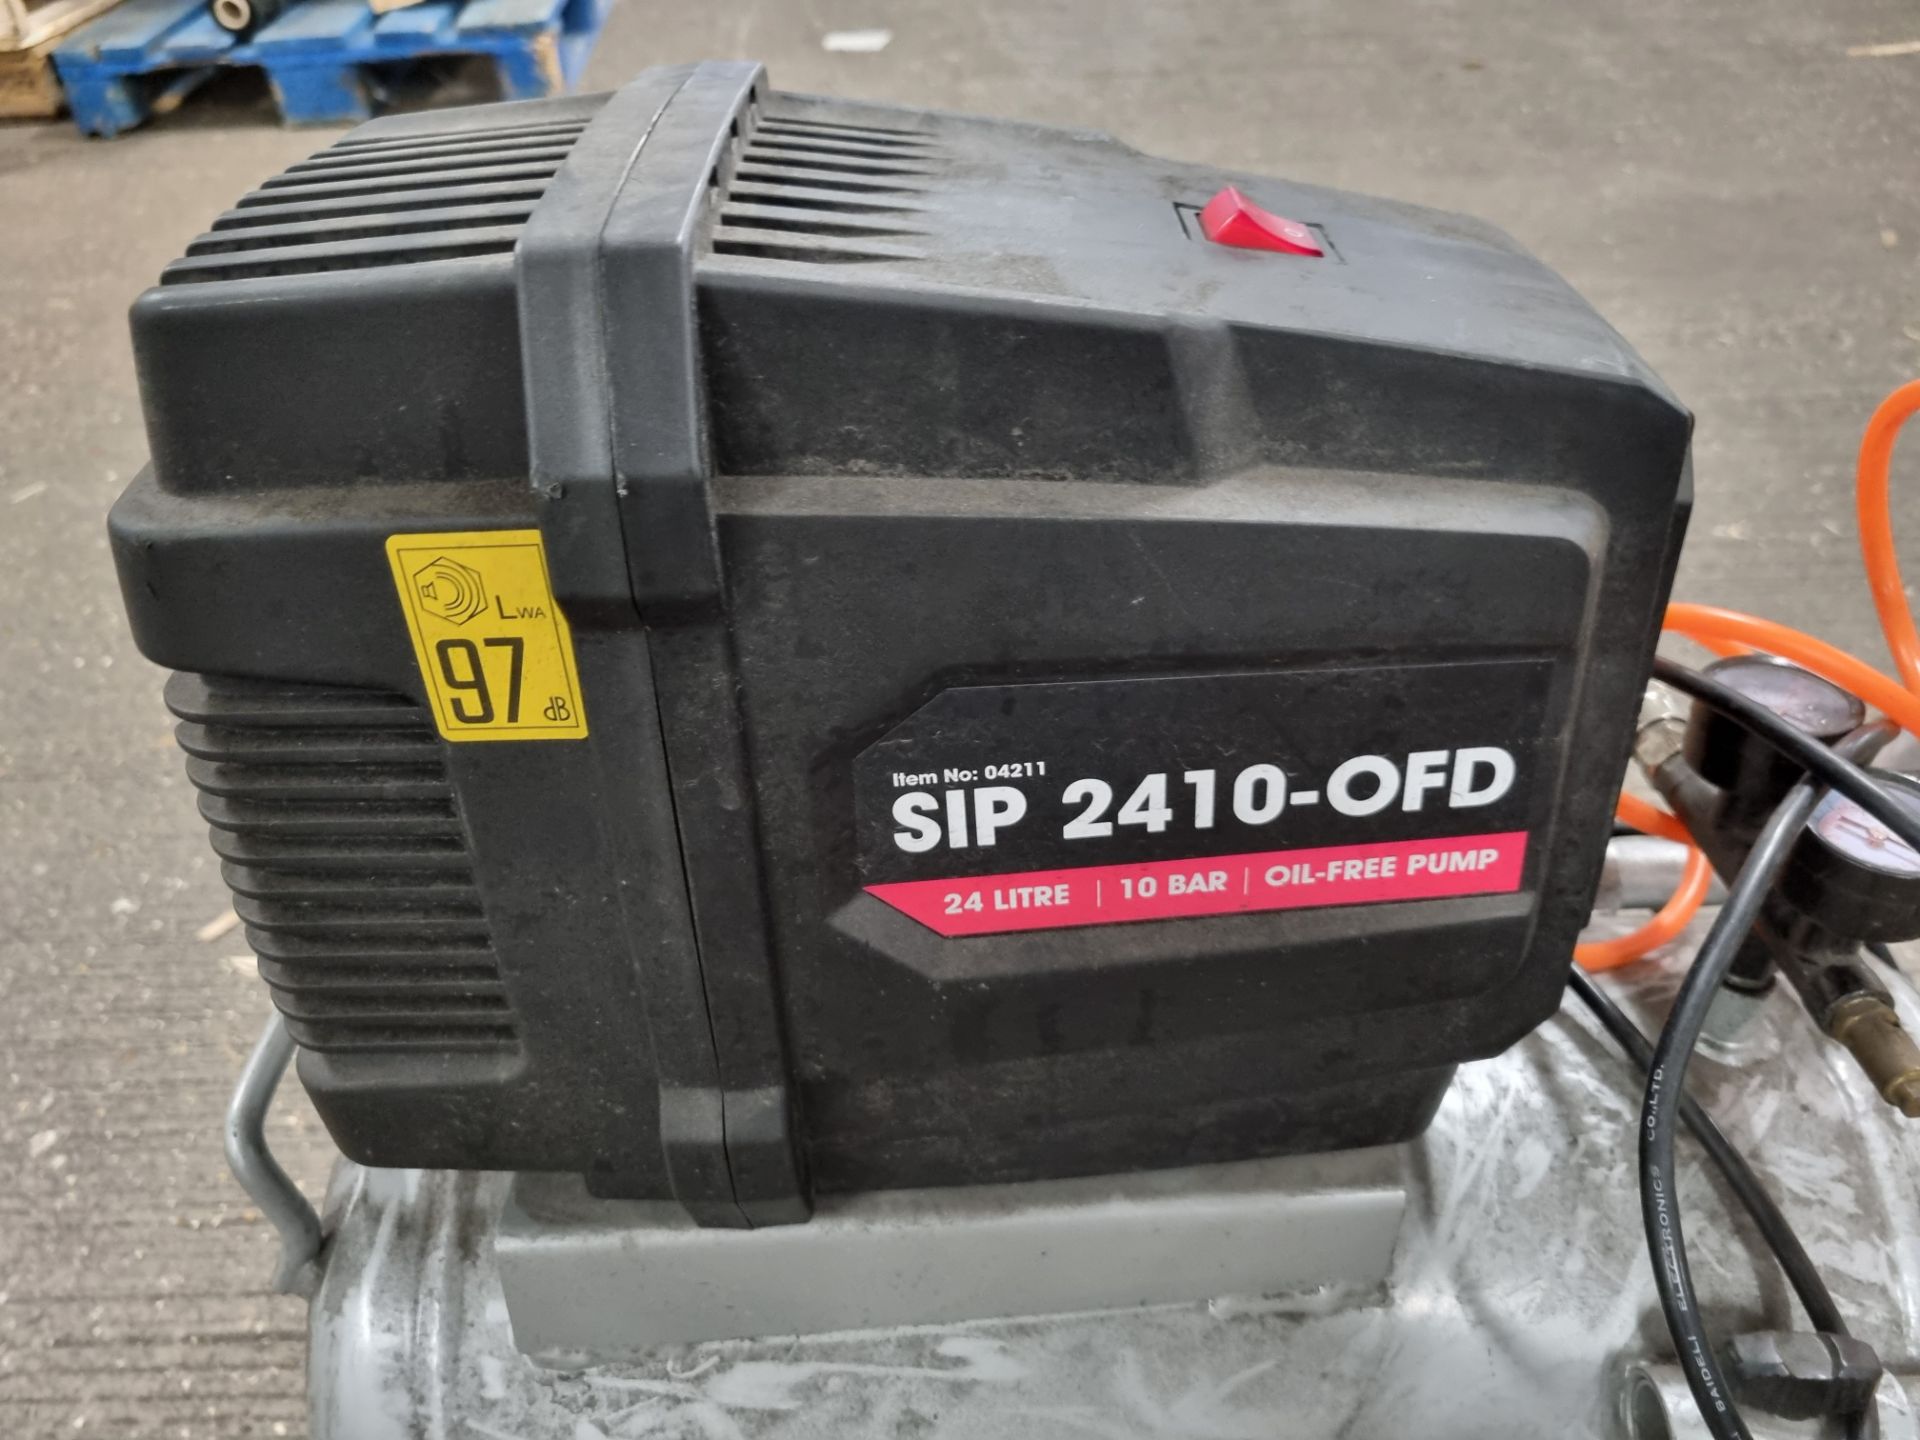 SIP 2410-OFD Mini Compressor - Image 2 of 3